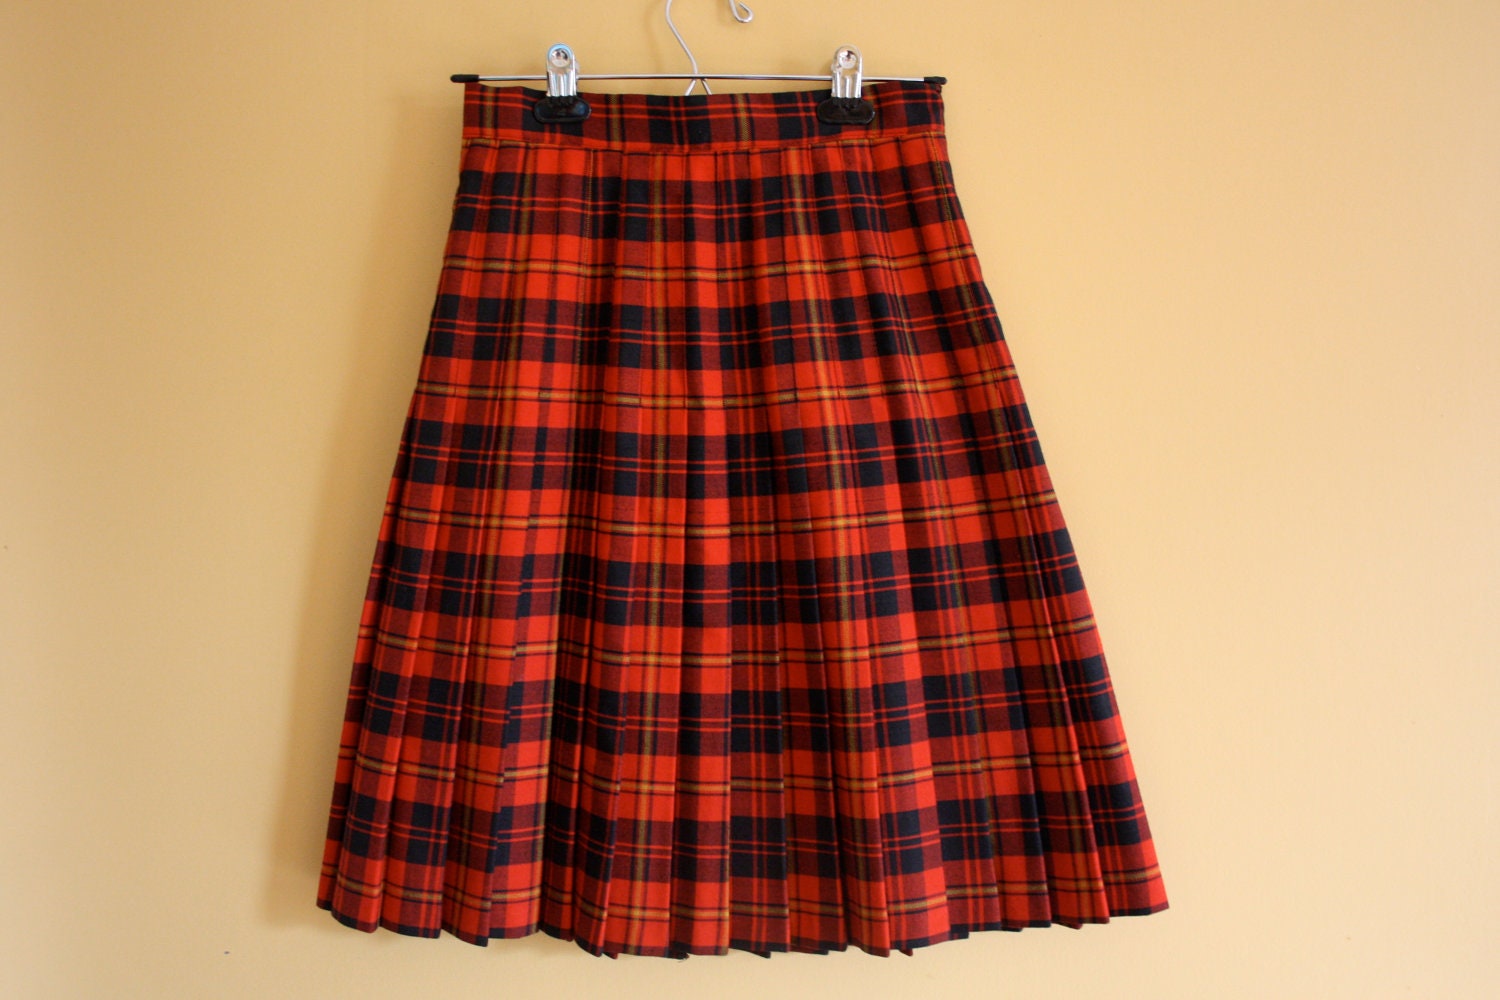 Vintage red plaid skirt pleated tartan skirt / Girl Teen